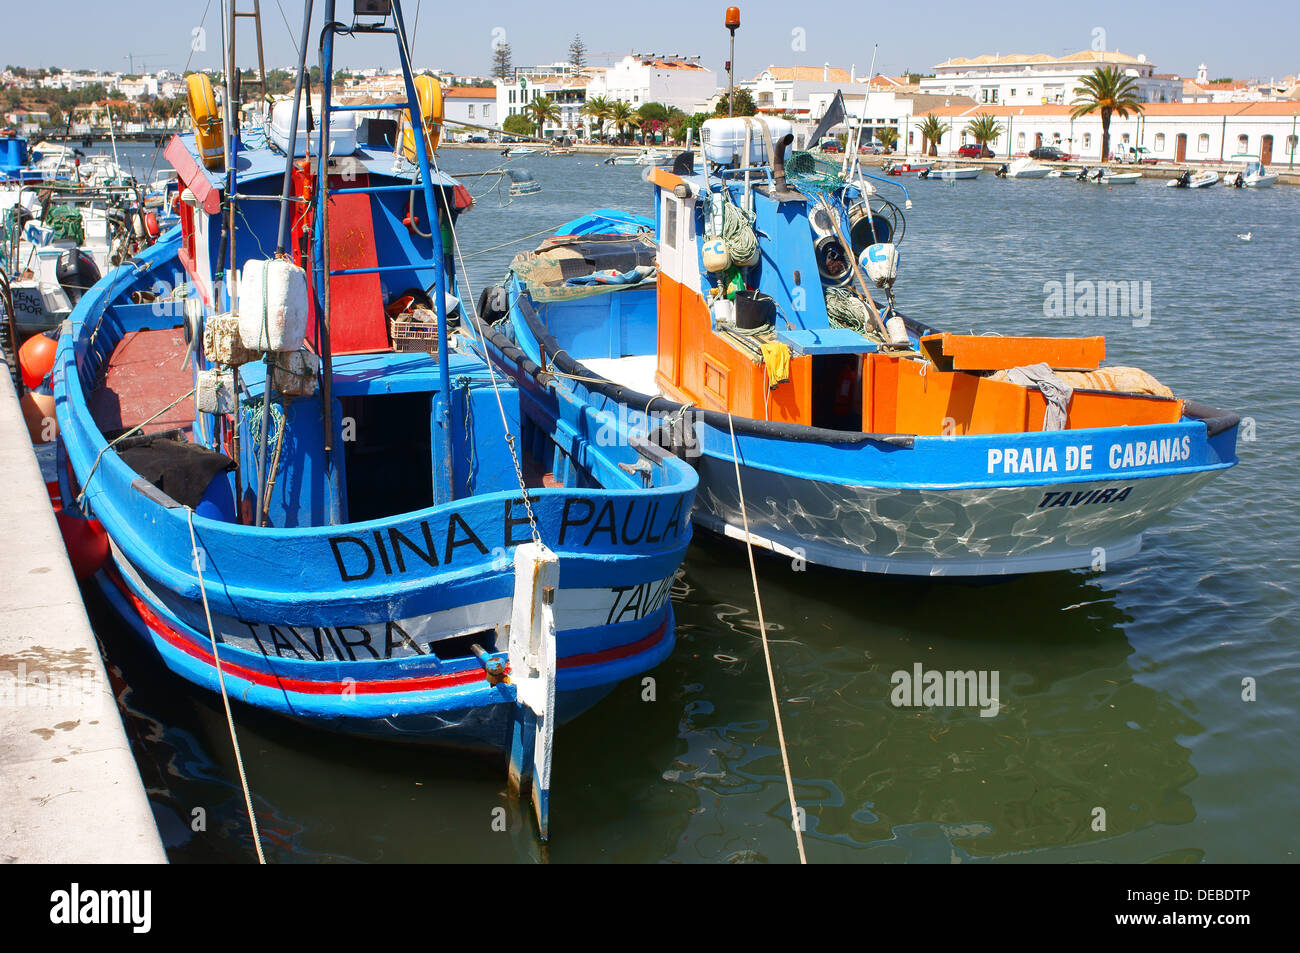 Colorful fishing boats on the River Rio Sequa Tavira Algarve Portugal Stock Photo